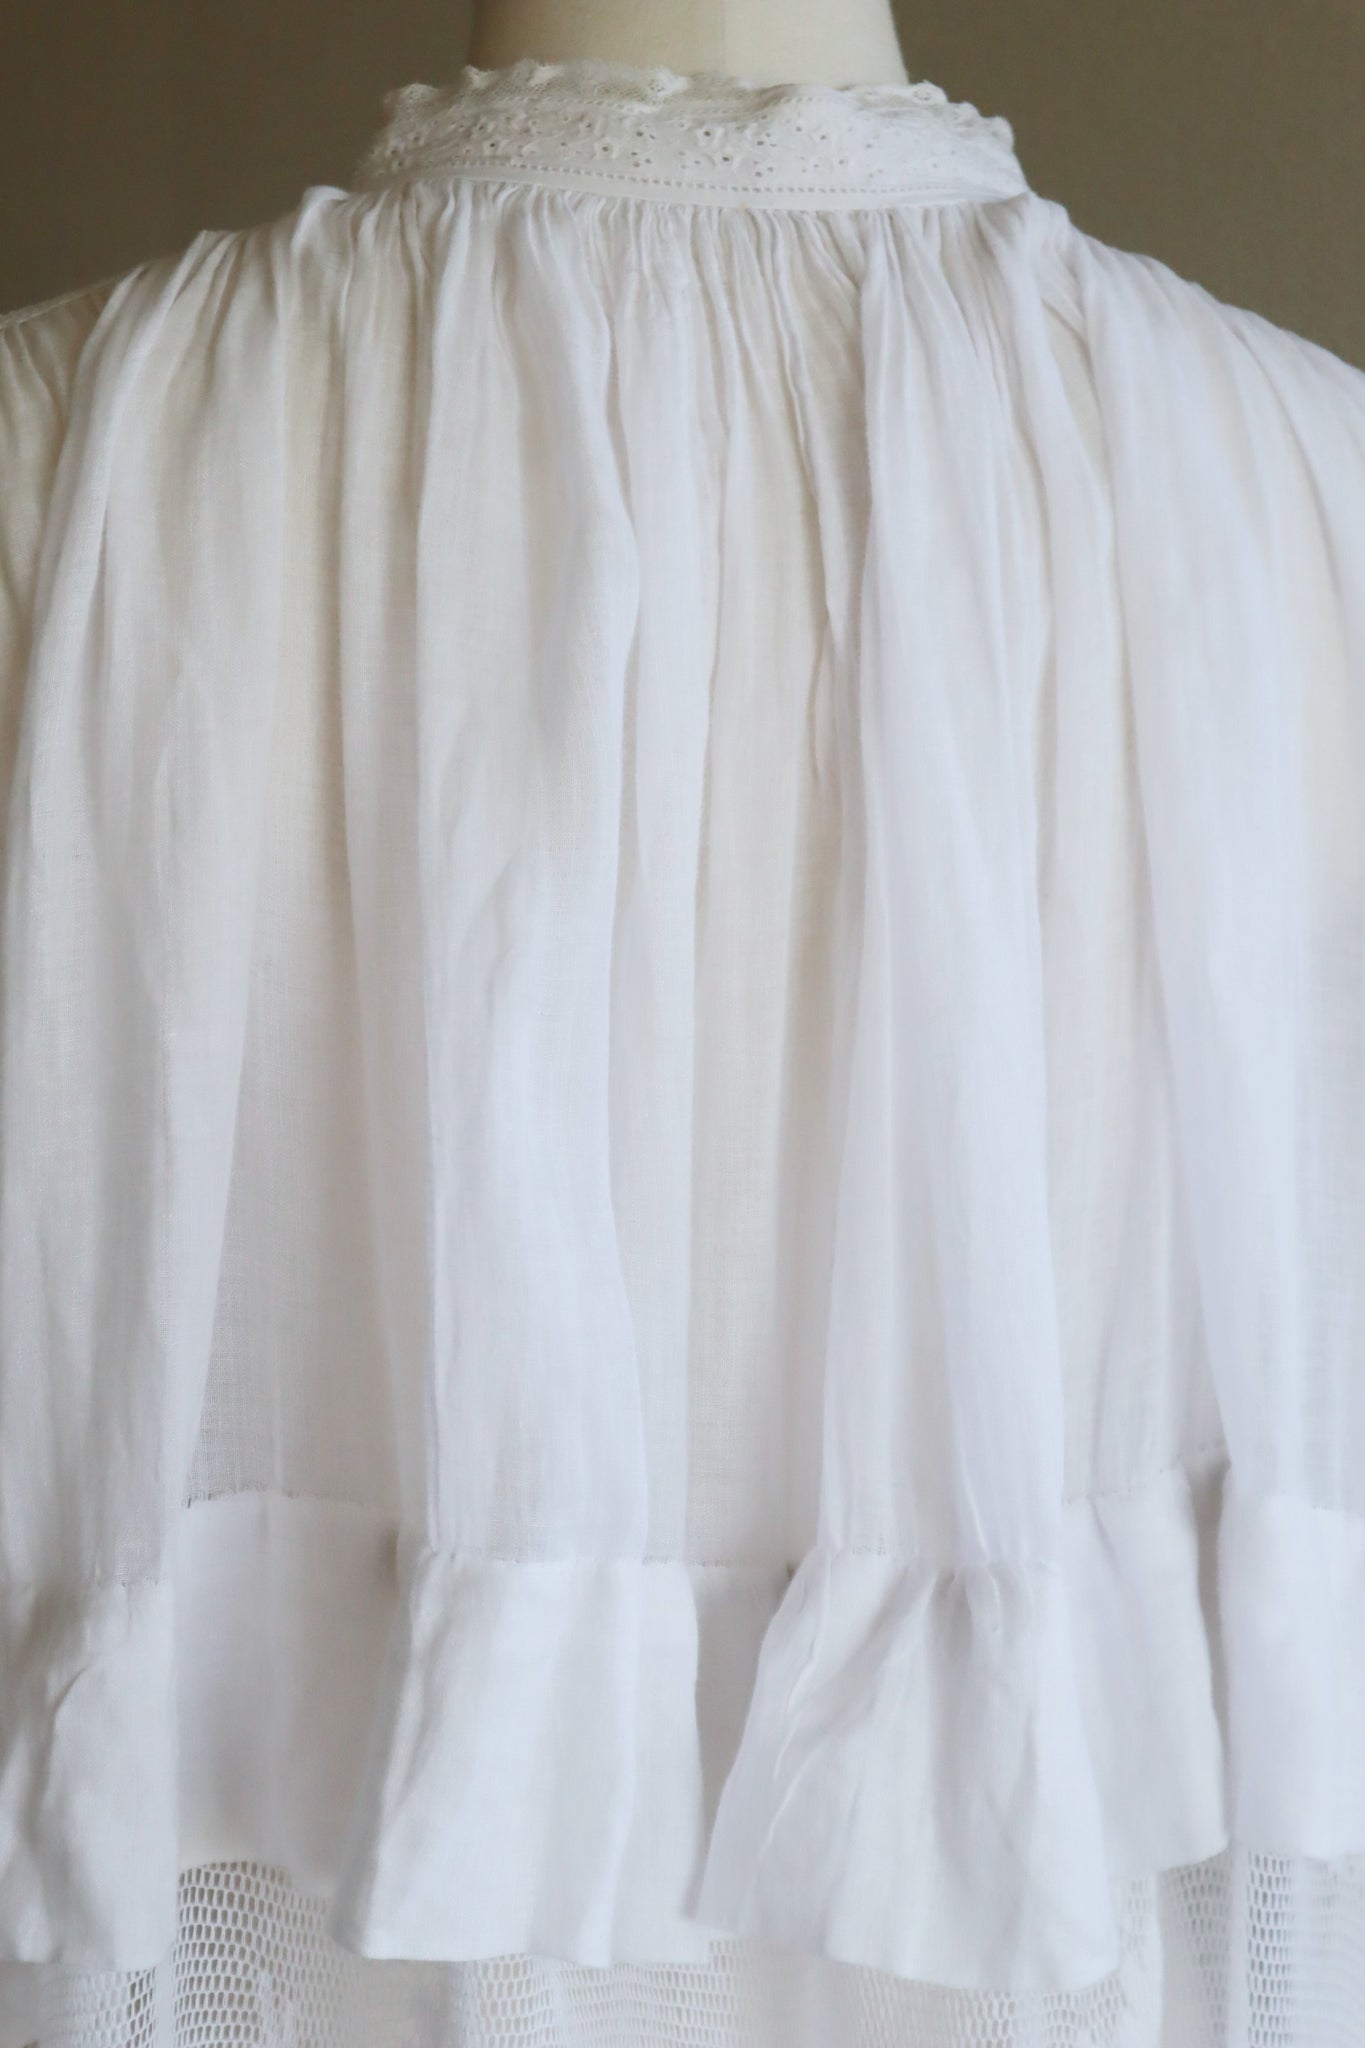 1900s Floral Lace White Cotton Gauze Church Smock Long Dress